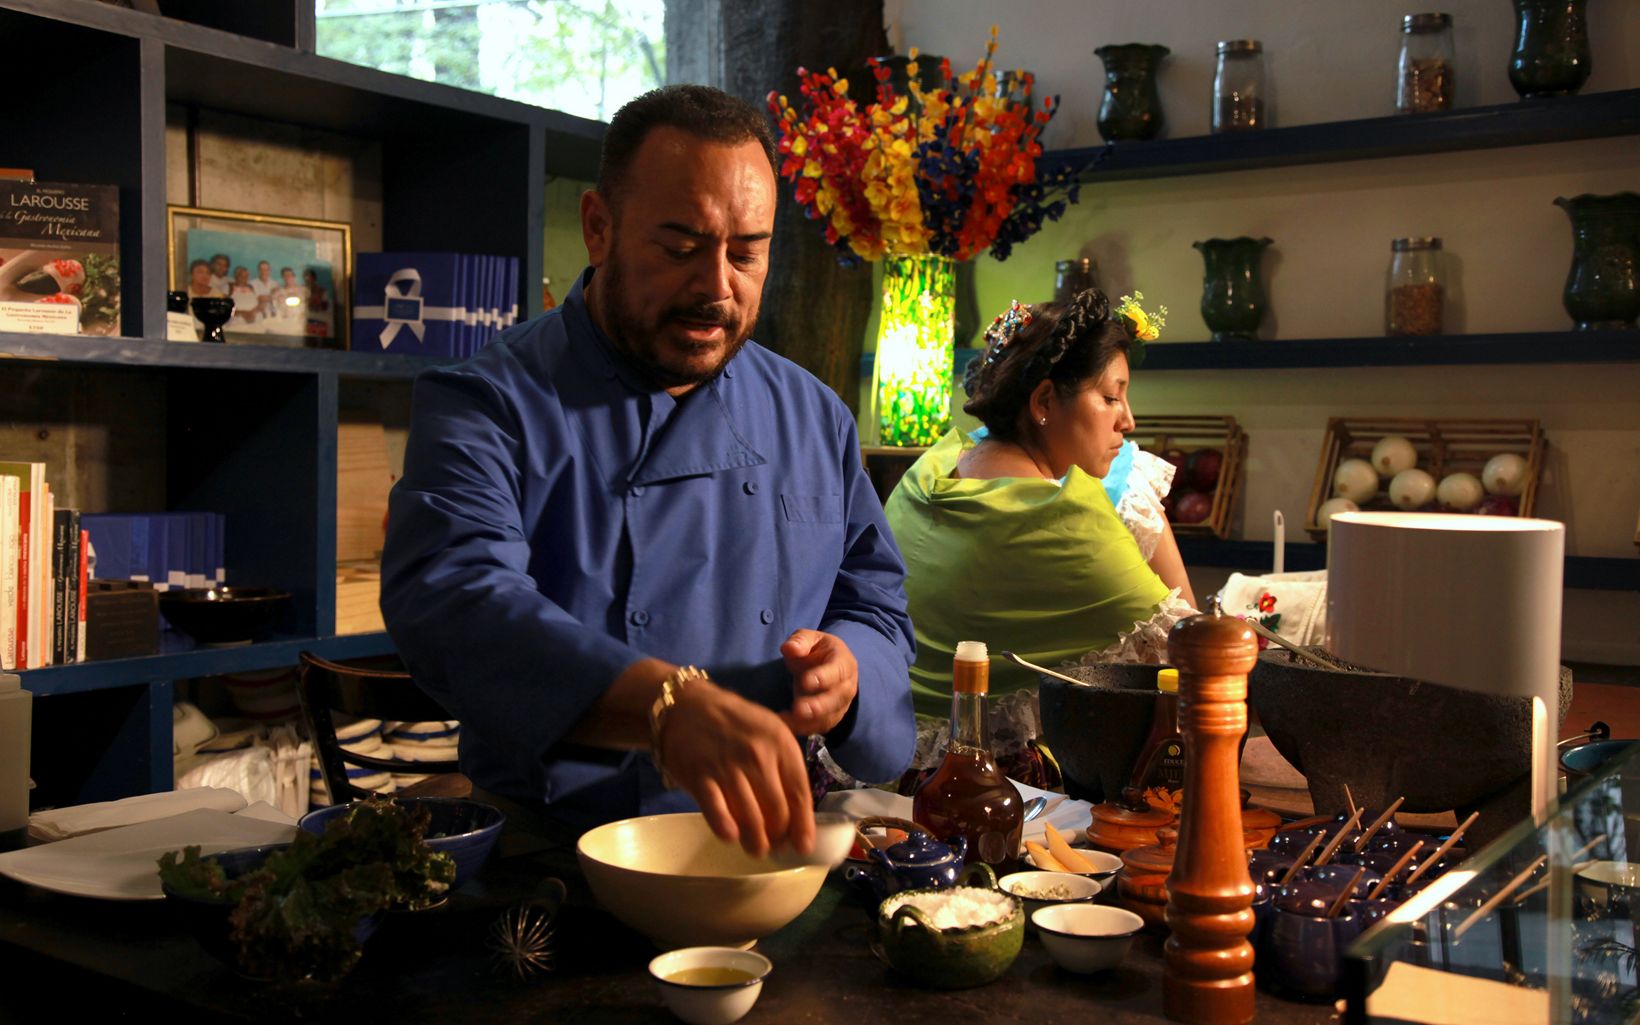 Mexican c hef Ricardo Munoz prepares a dish in his kitc